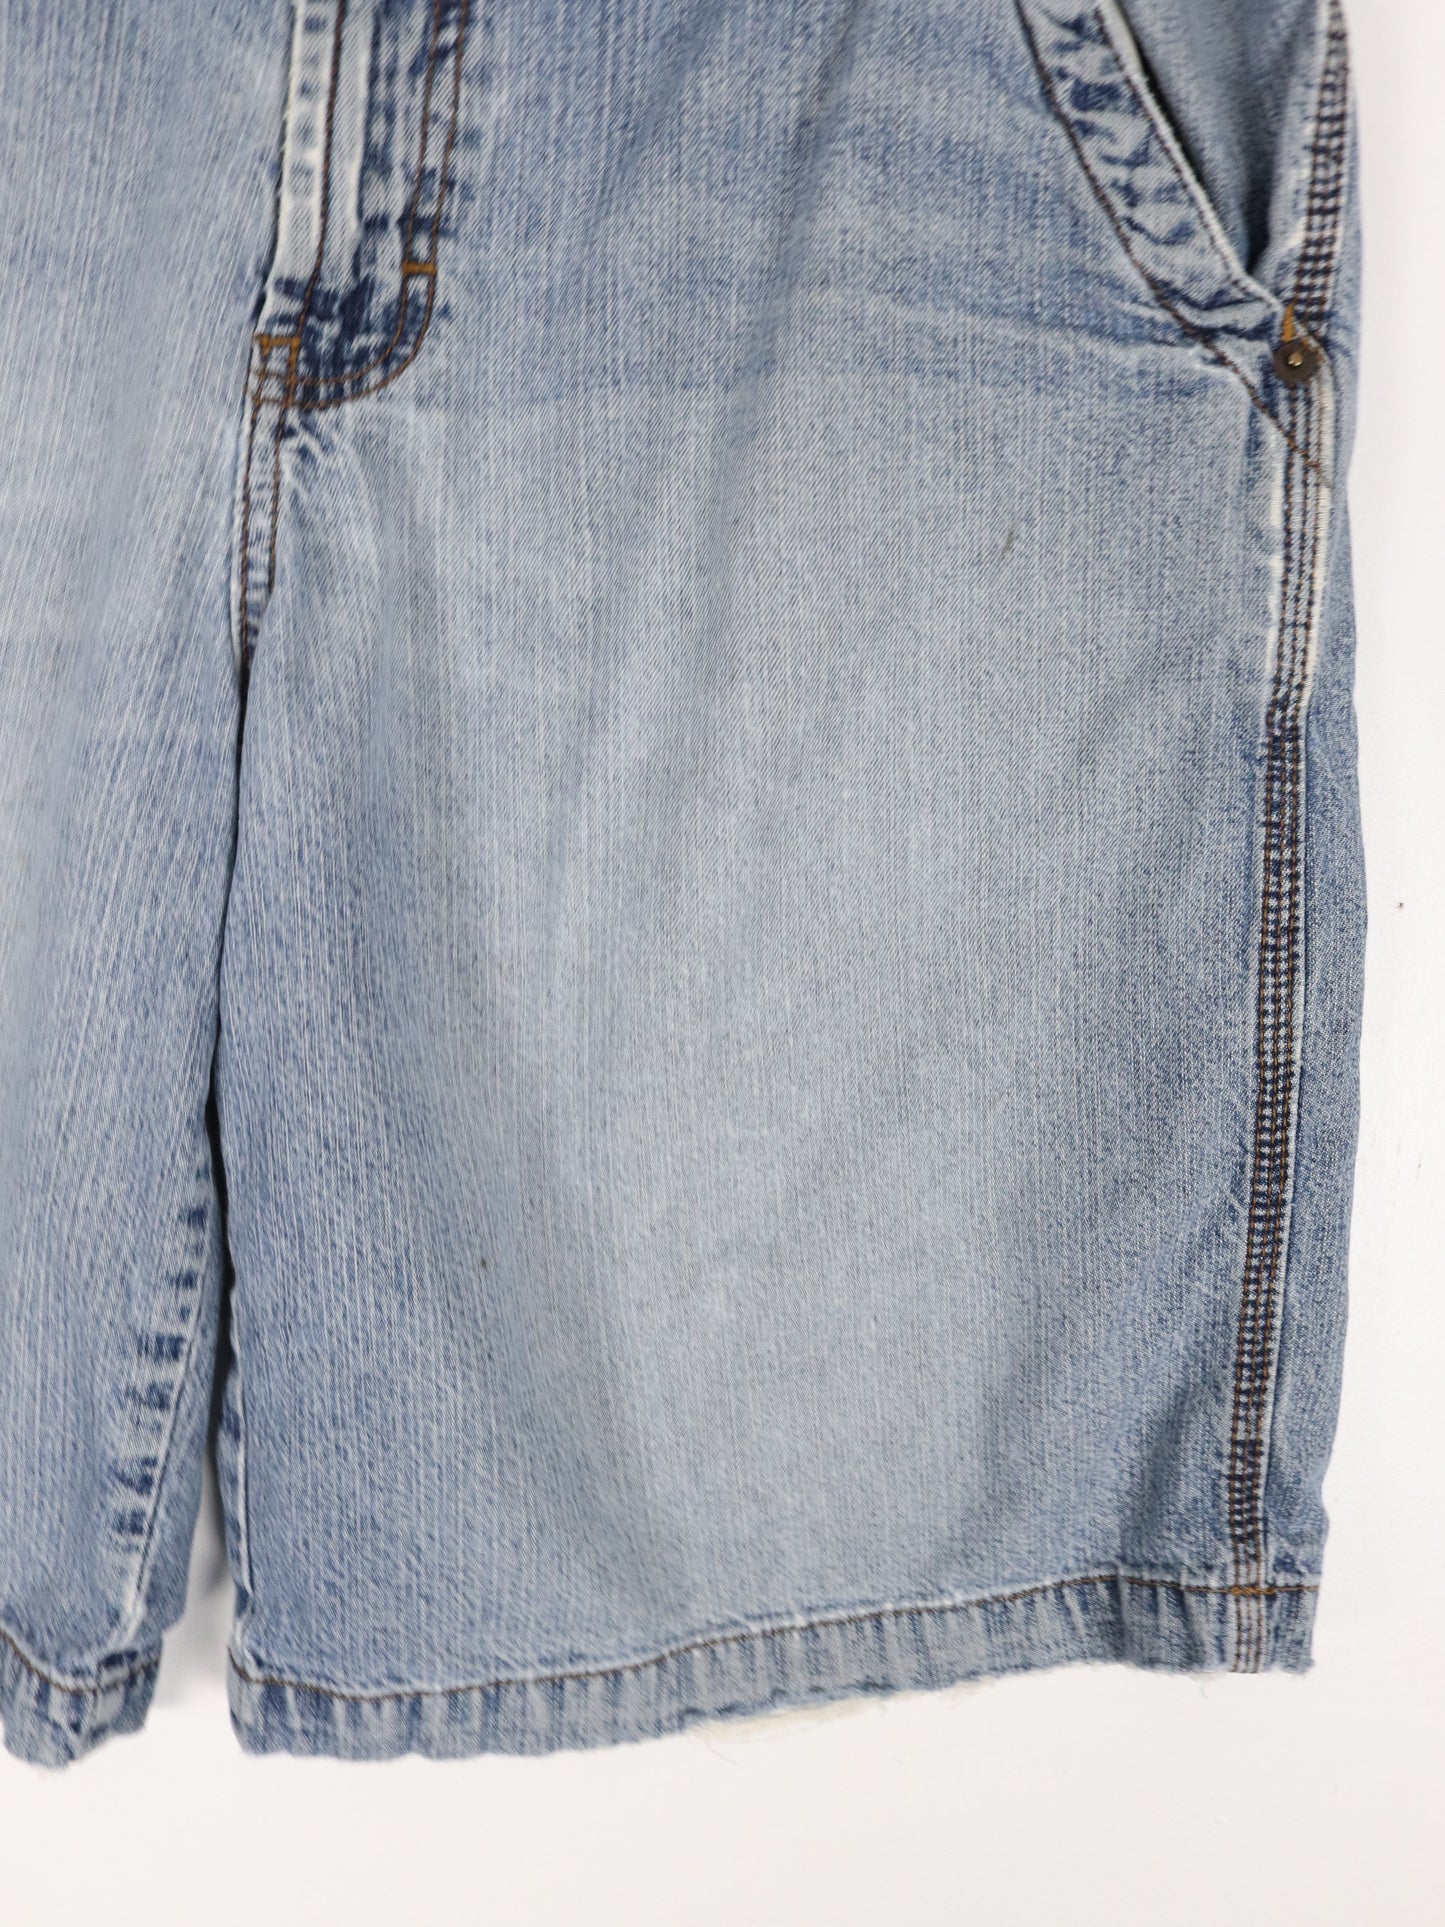 Vintage Aeropostale Shorts Mens 33 Blue Denim Jorts